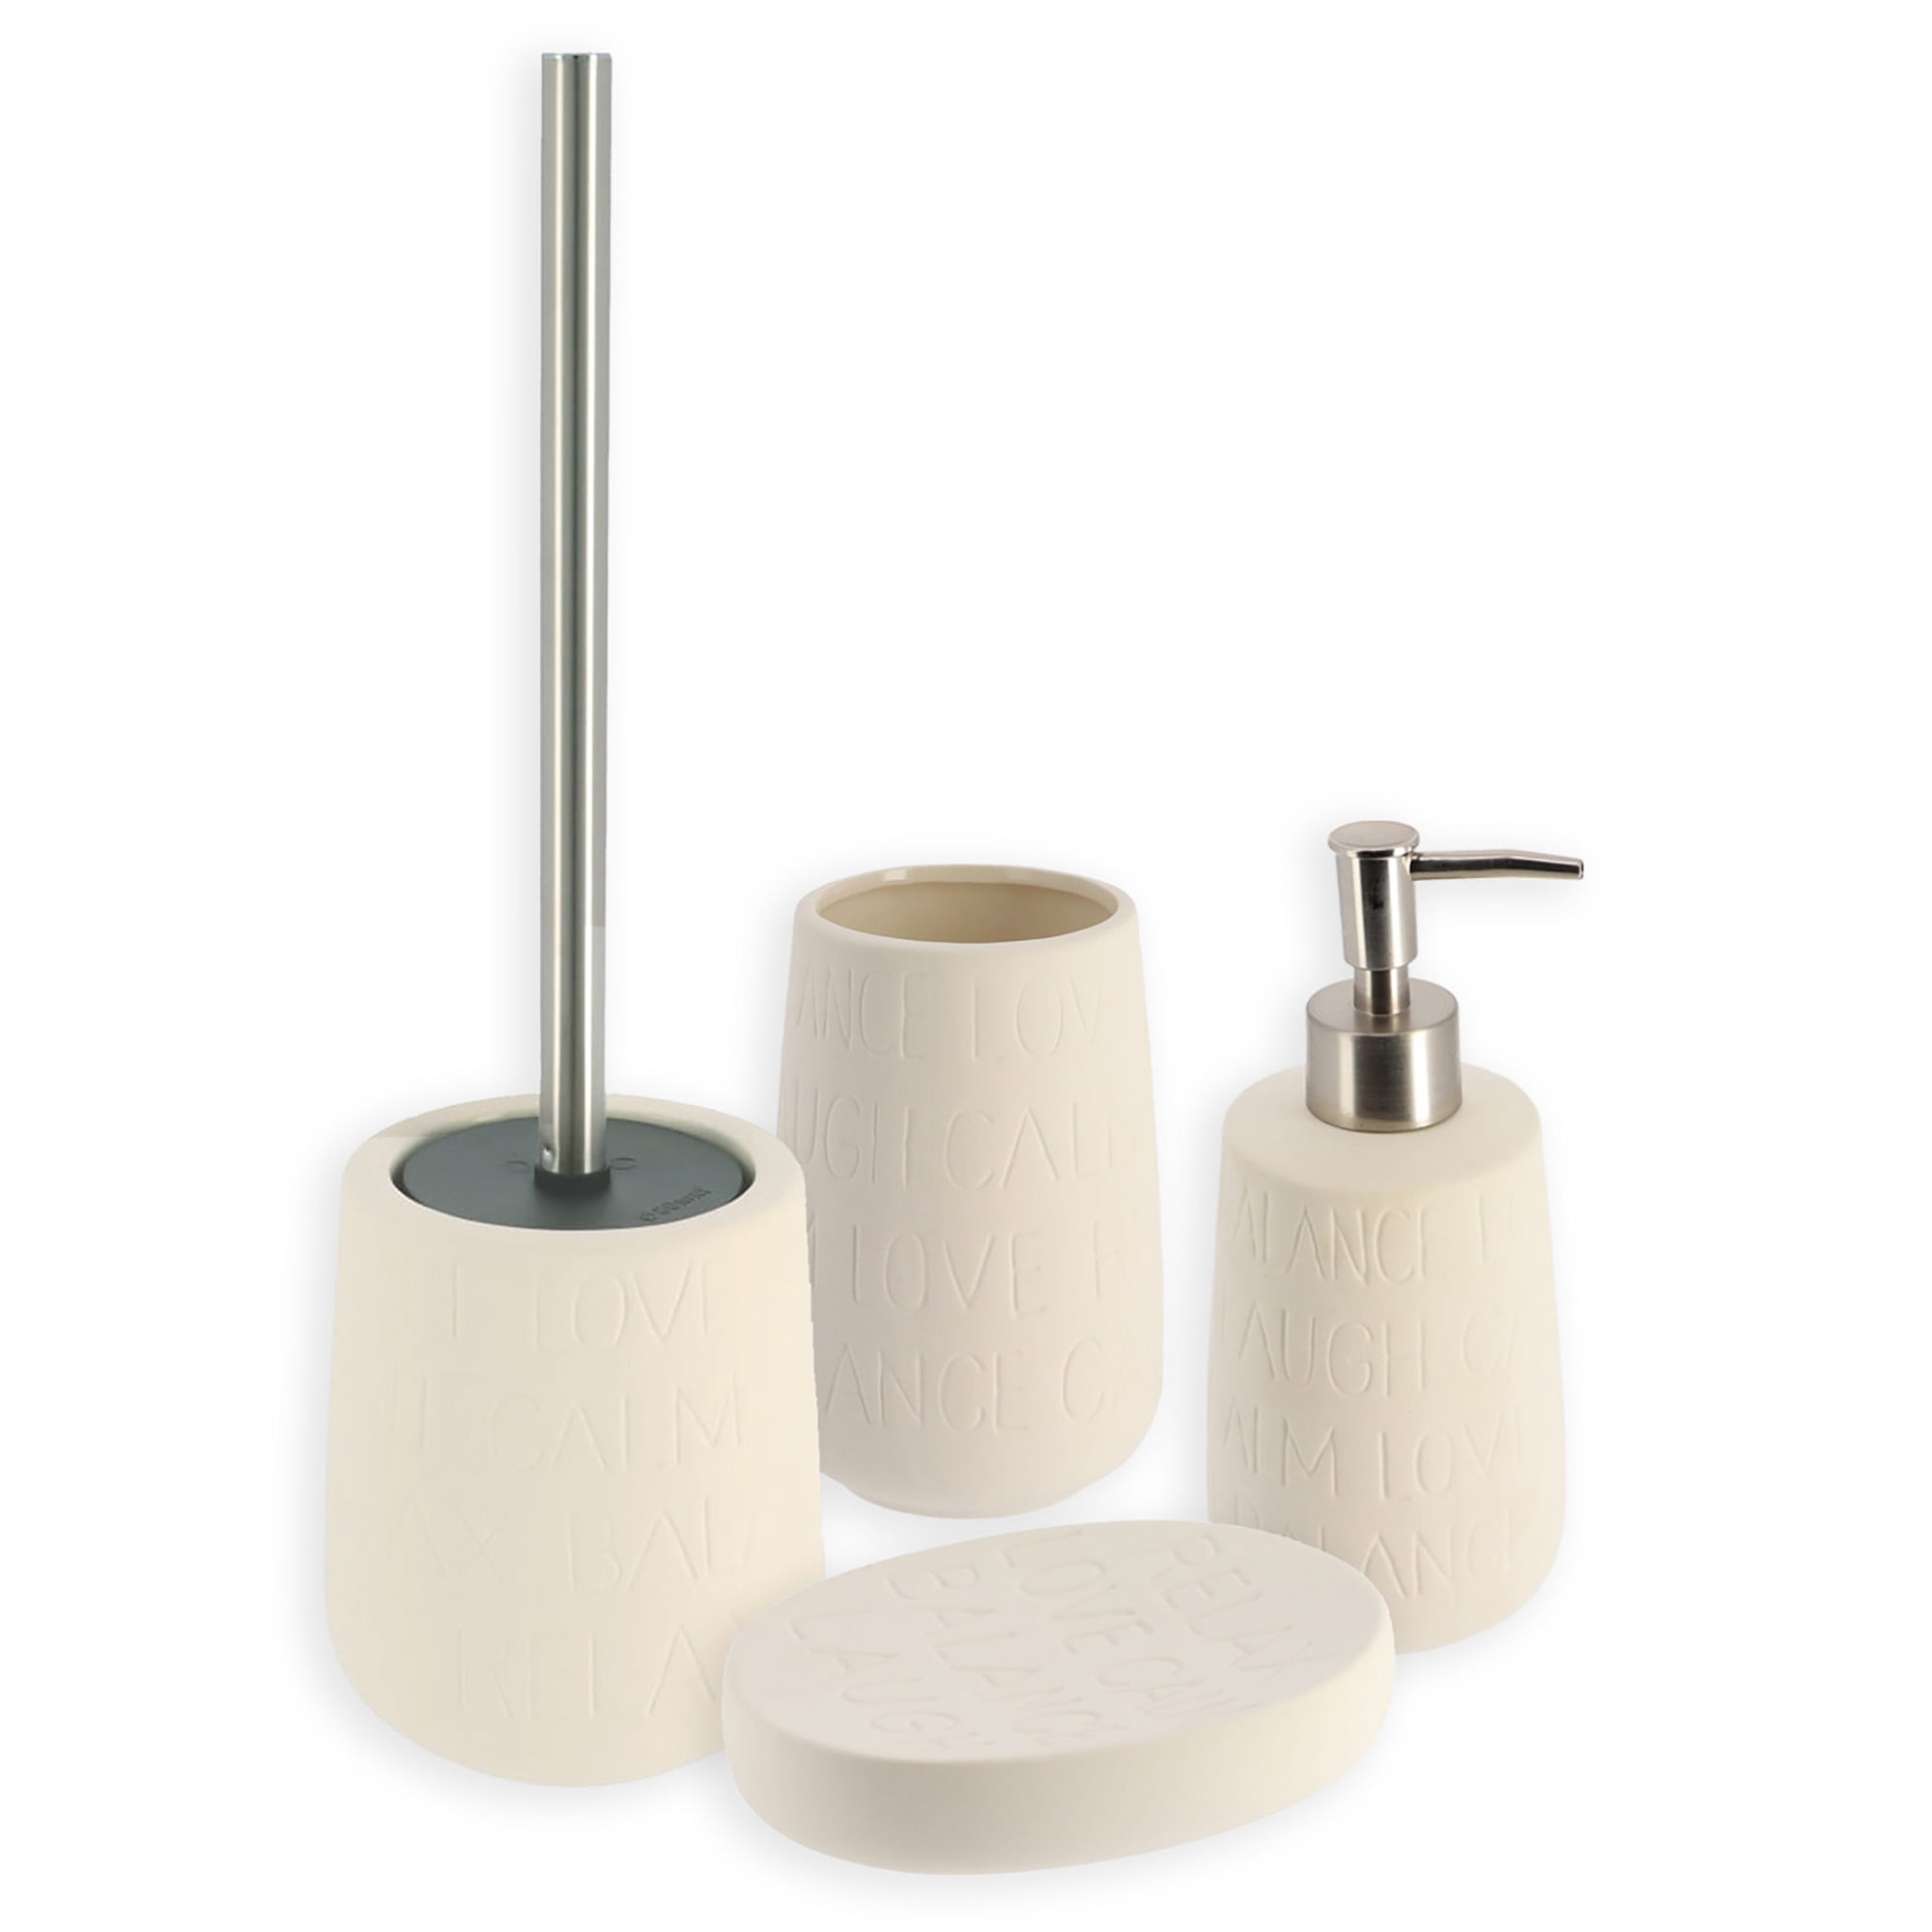 Satu Brown Bathroom Accessory Set Acacia Wood 3 Pieces Includes Bathroom  Soap Dispenser, Bathroom Tumbler, Soap Dish Accessories for Bathroom Decor